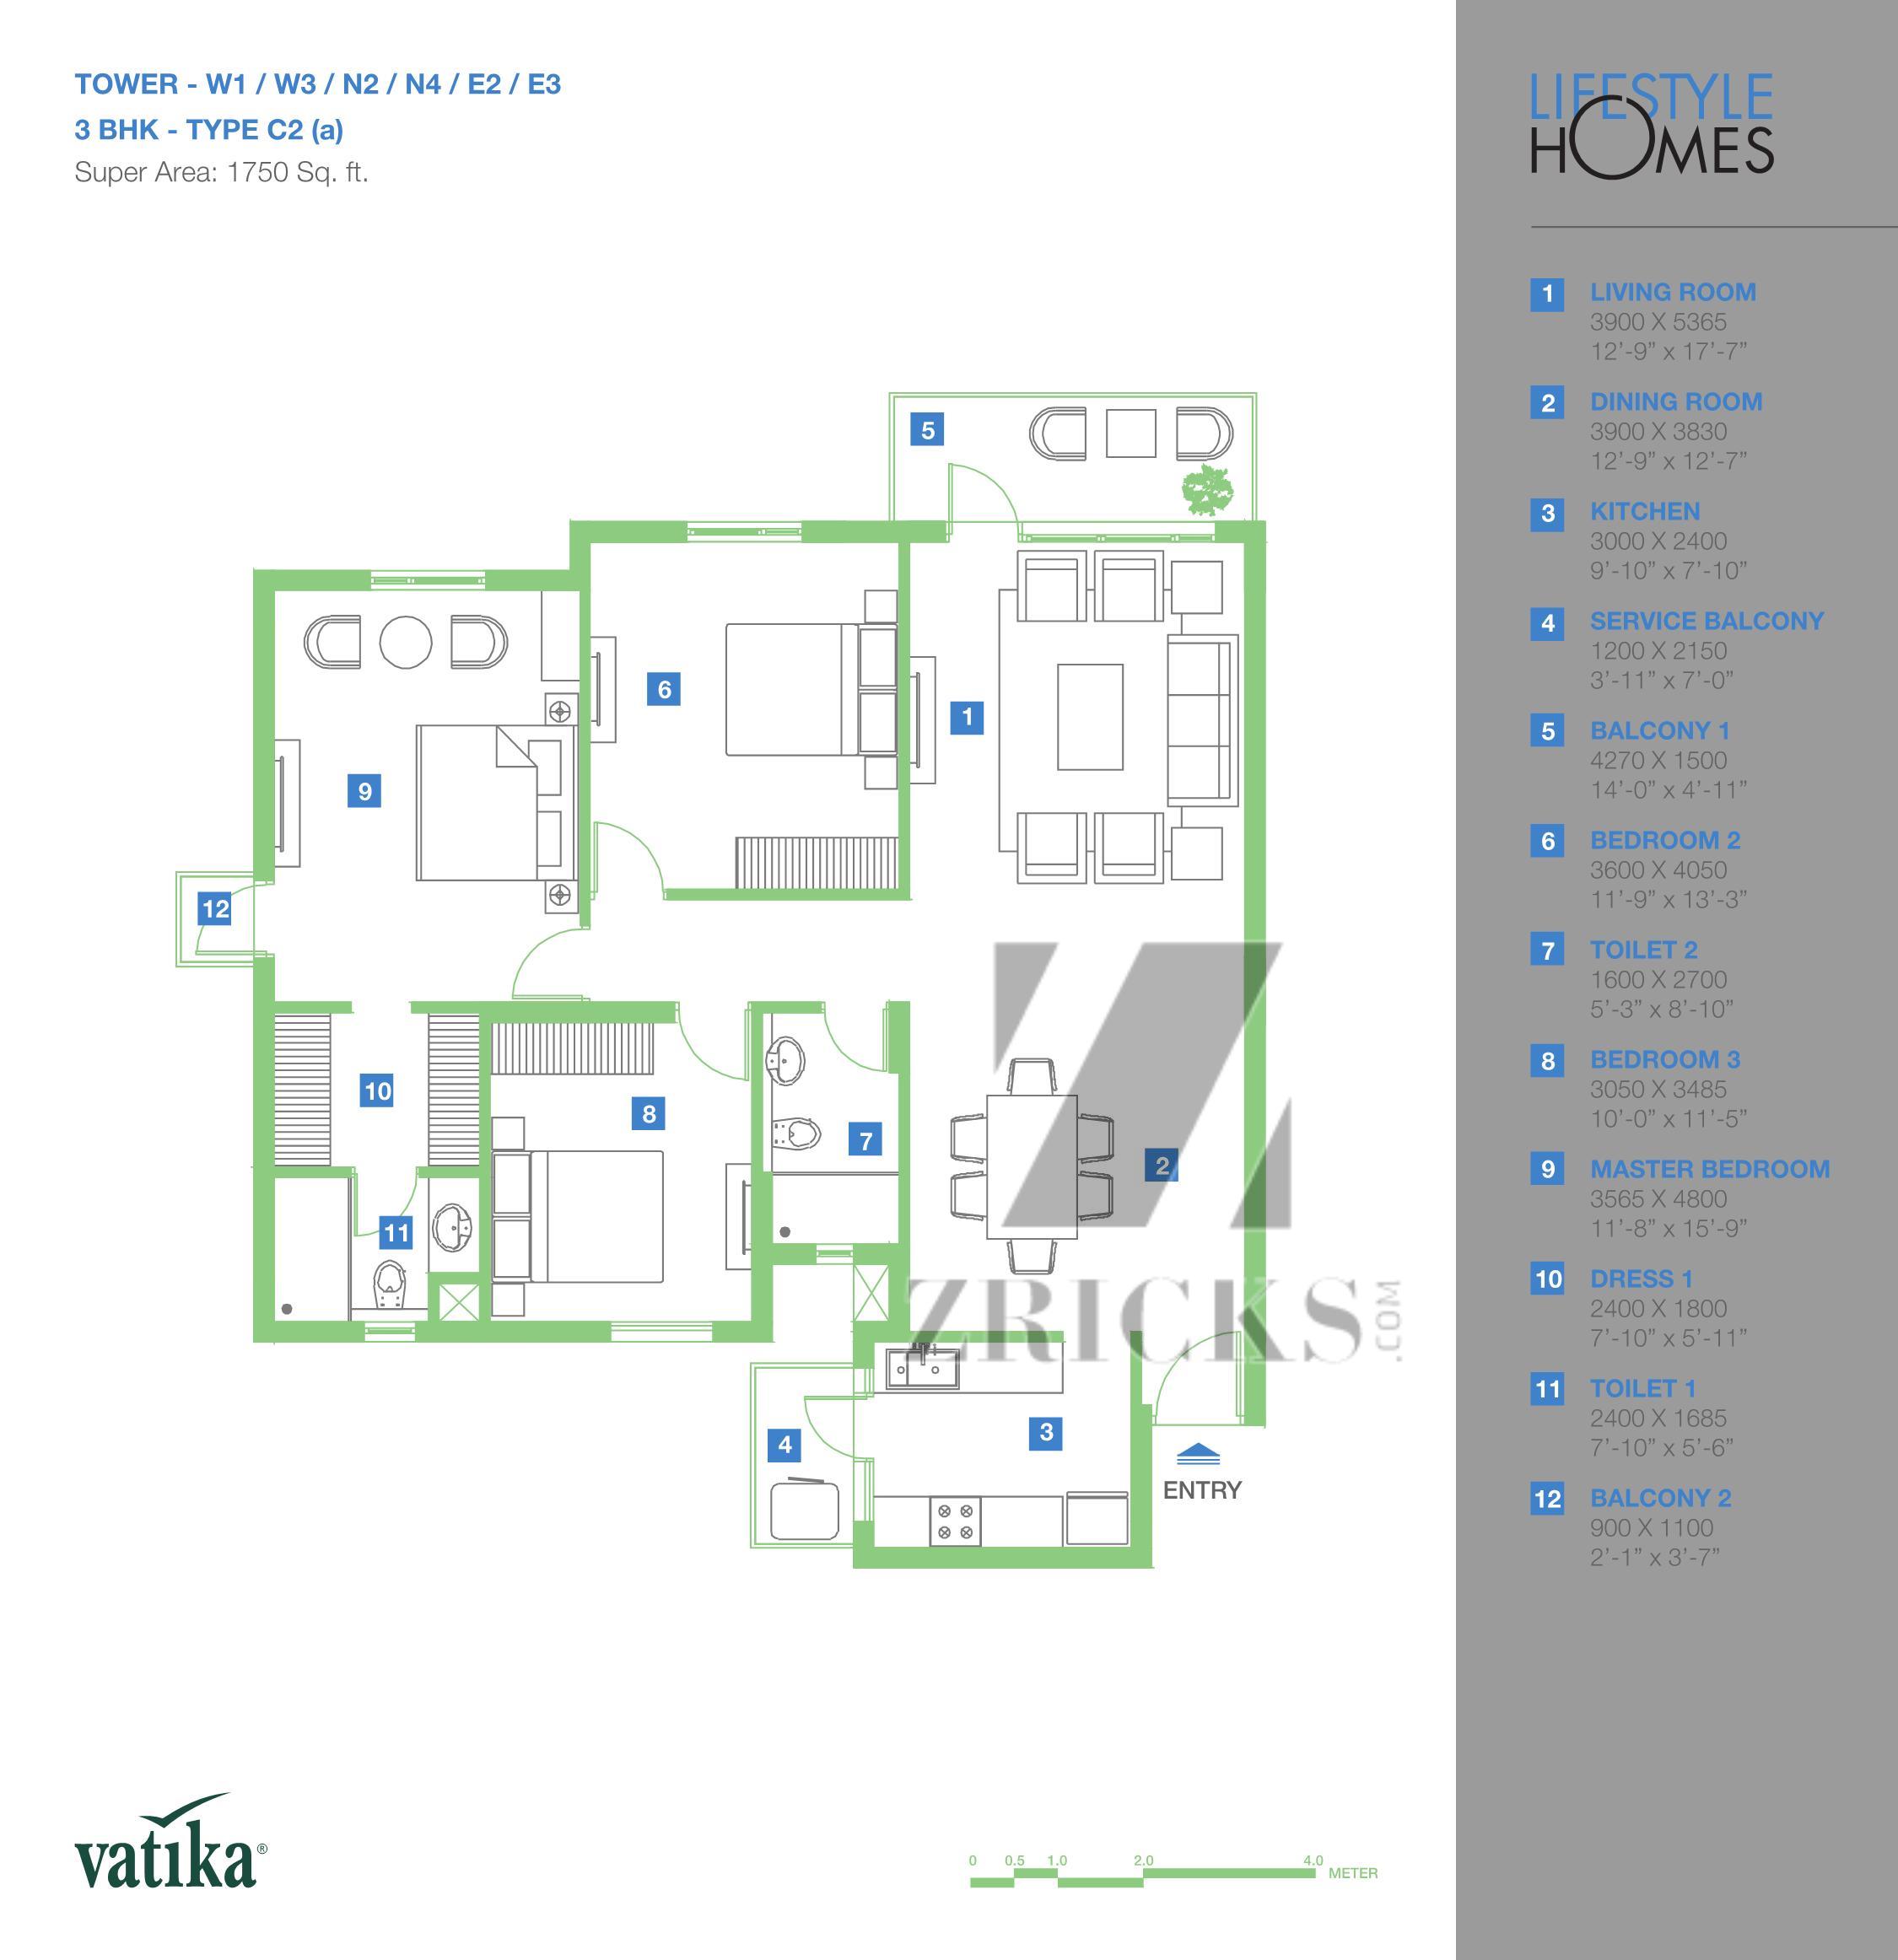 Vatika Lifestyle Homes Floor Plan